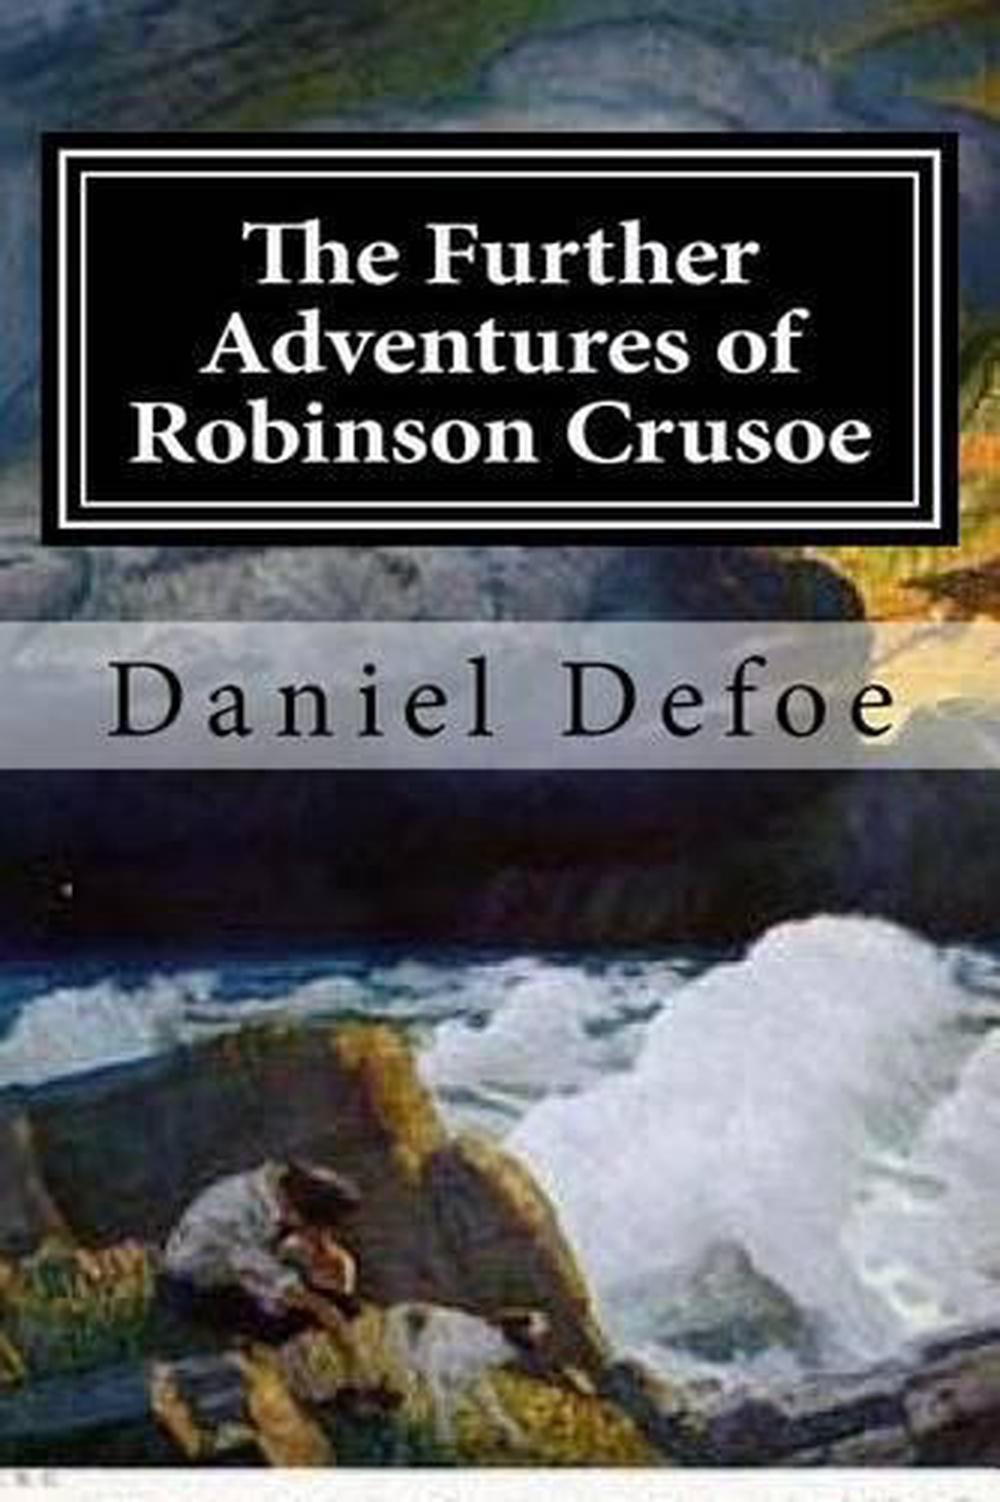 robinson crusoe daniel defoe book